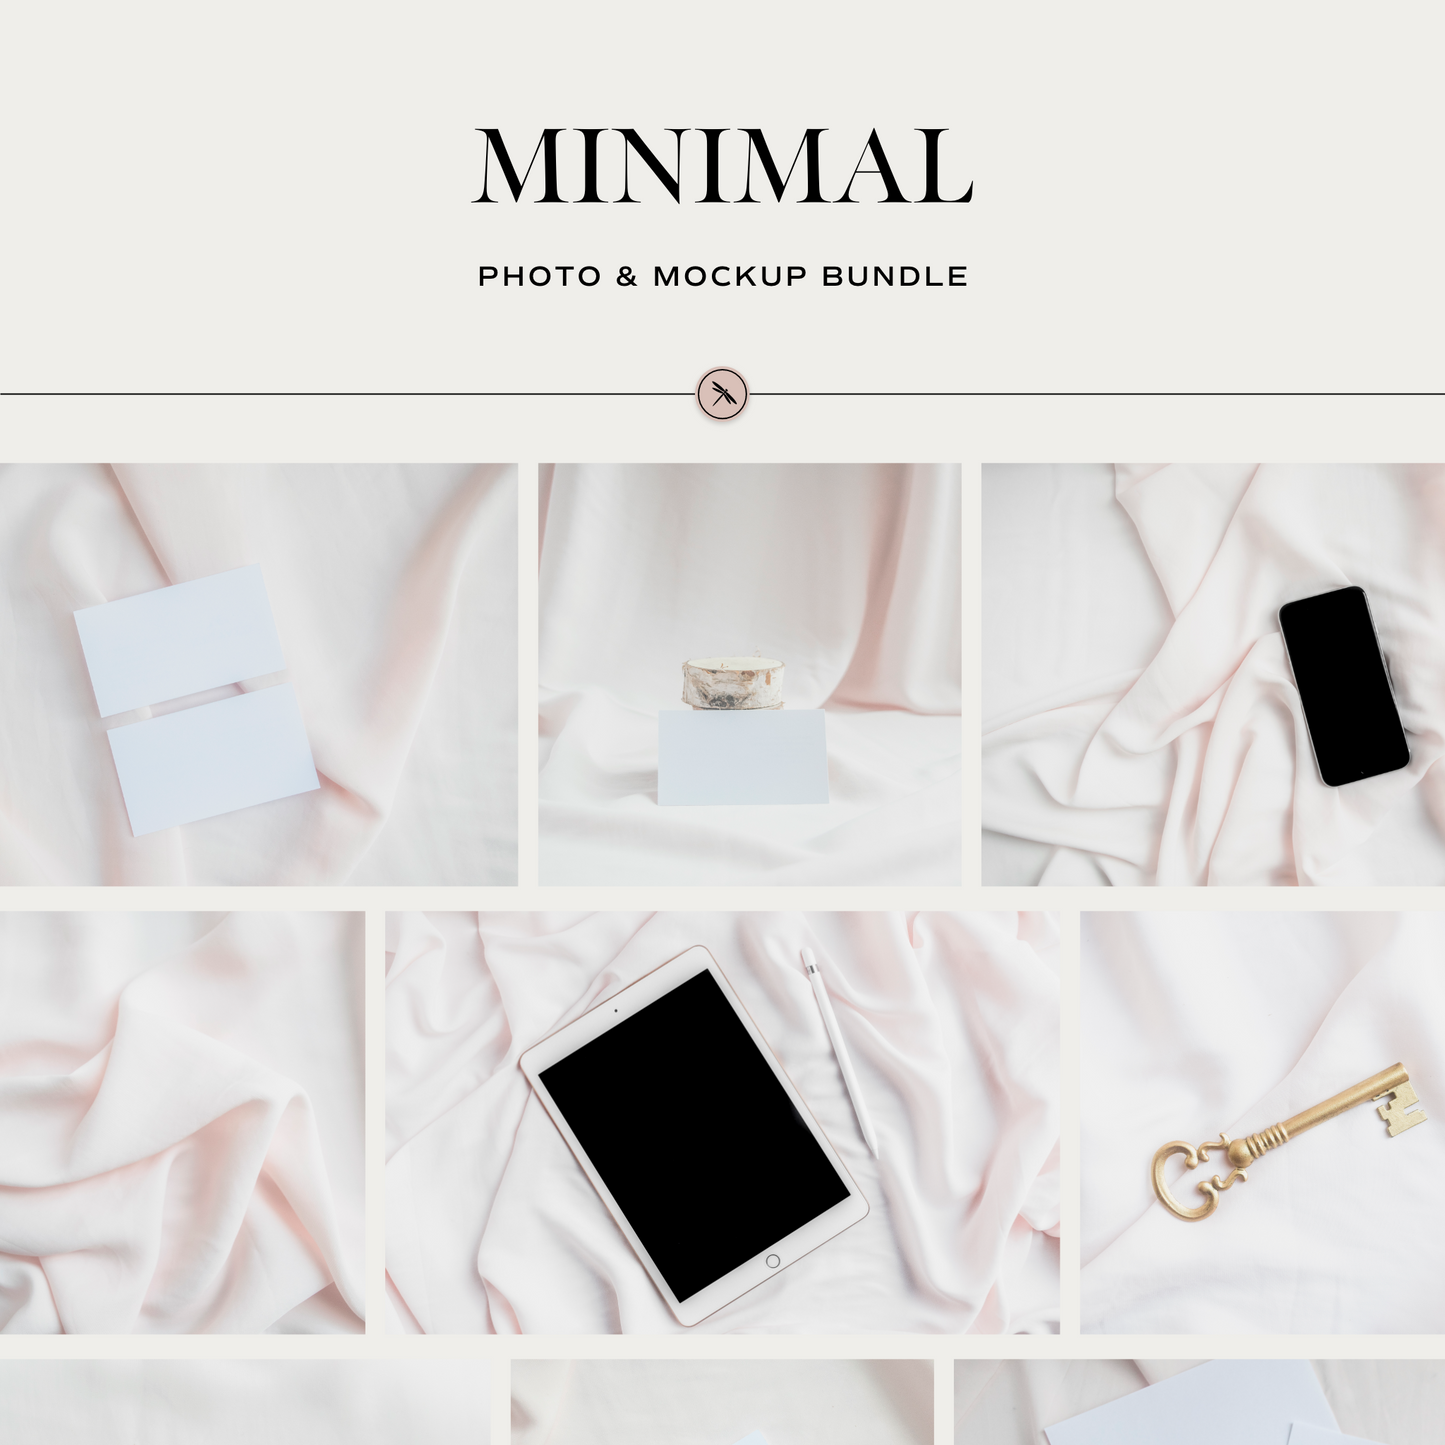 Minimal - Stock Photo & Mockup Bundle